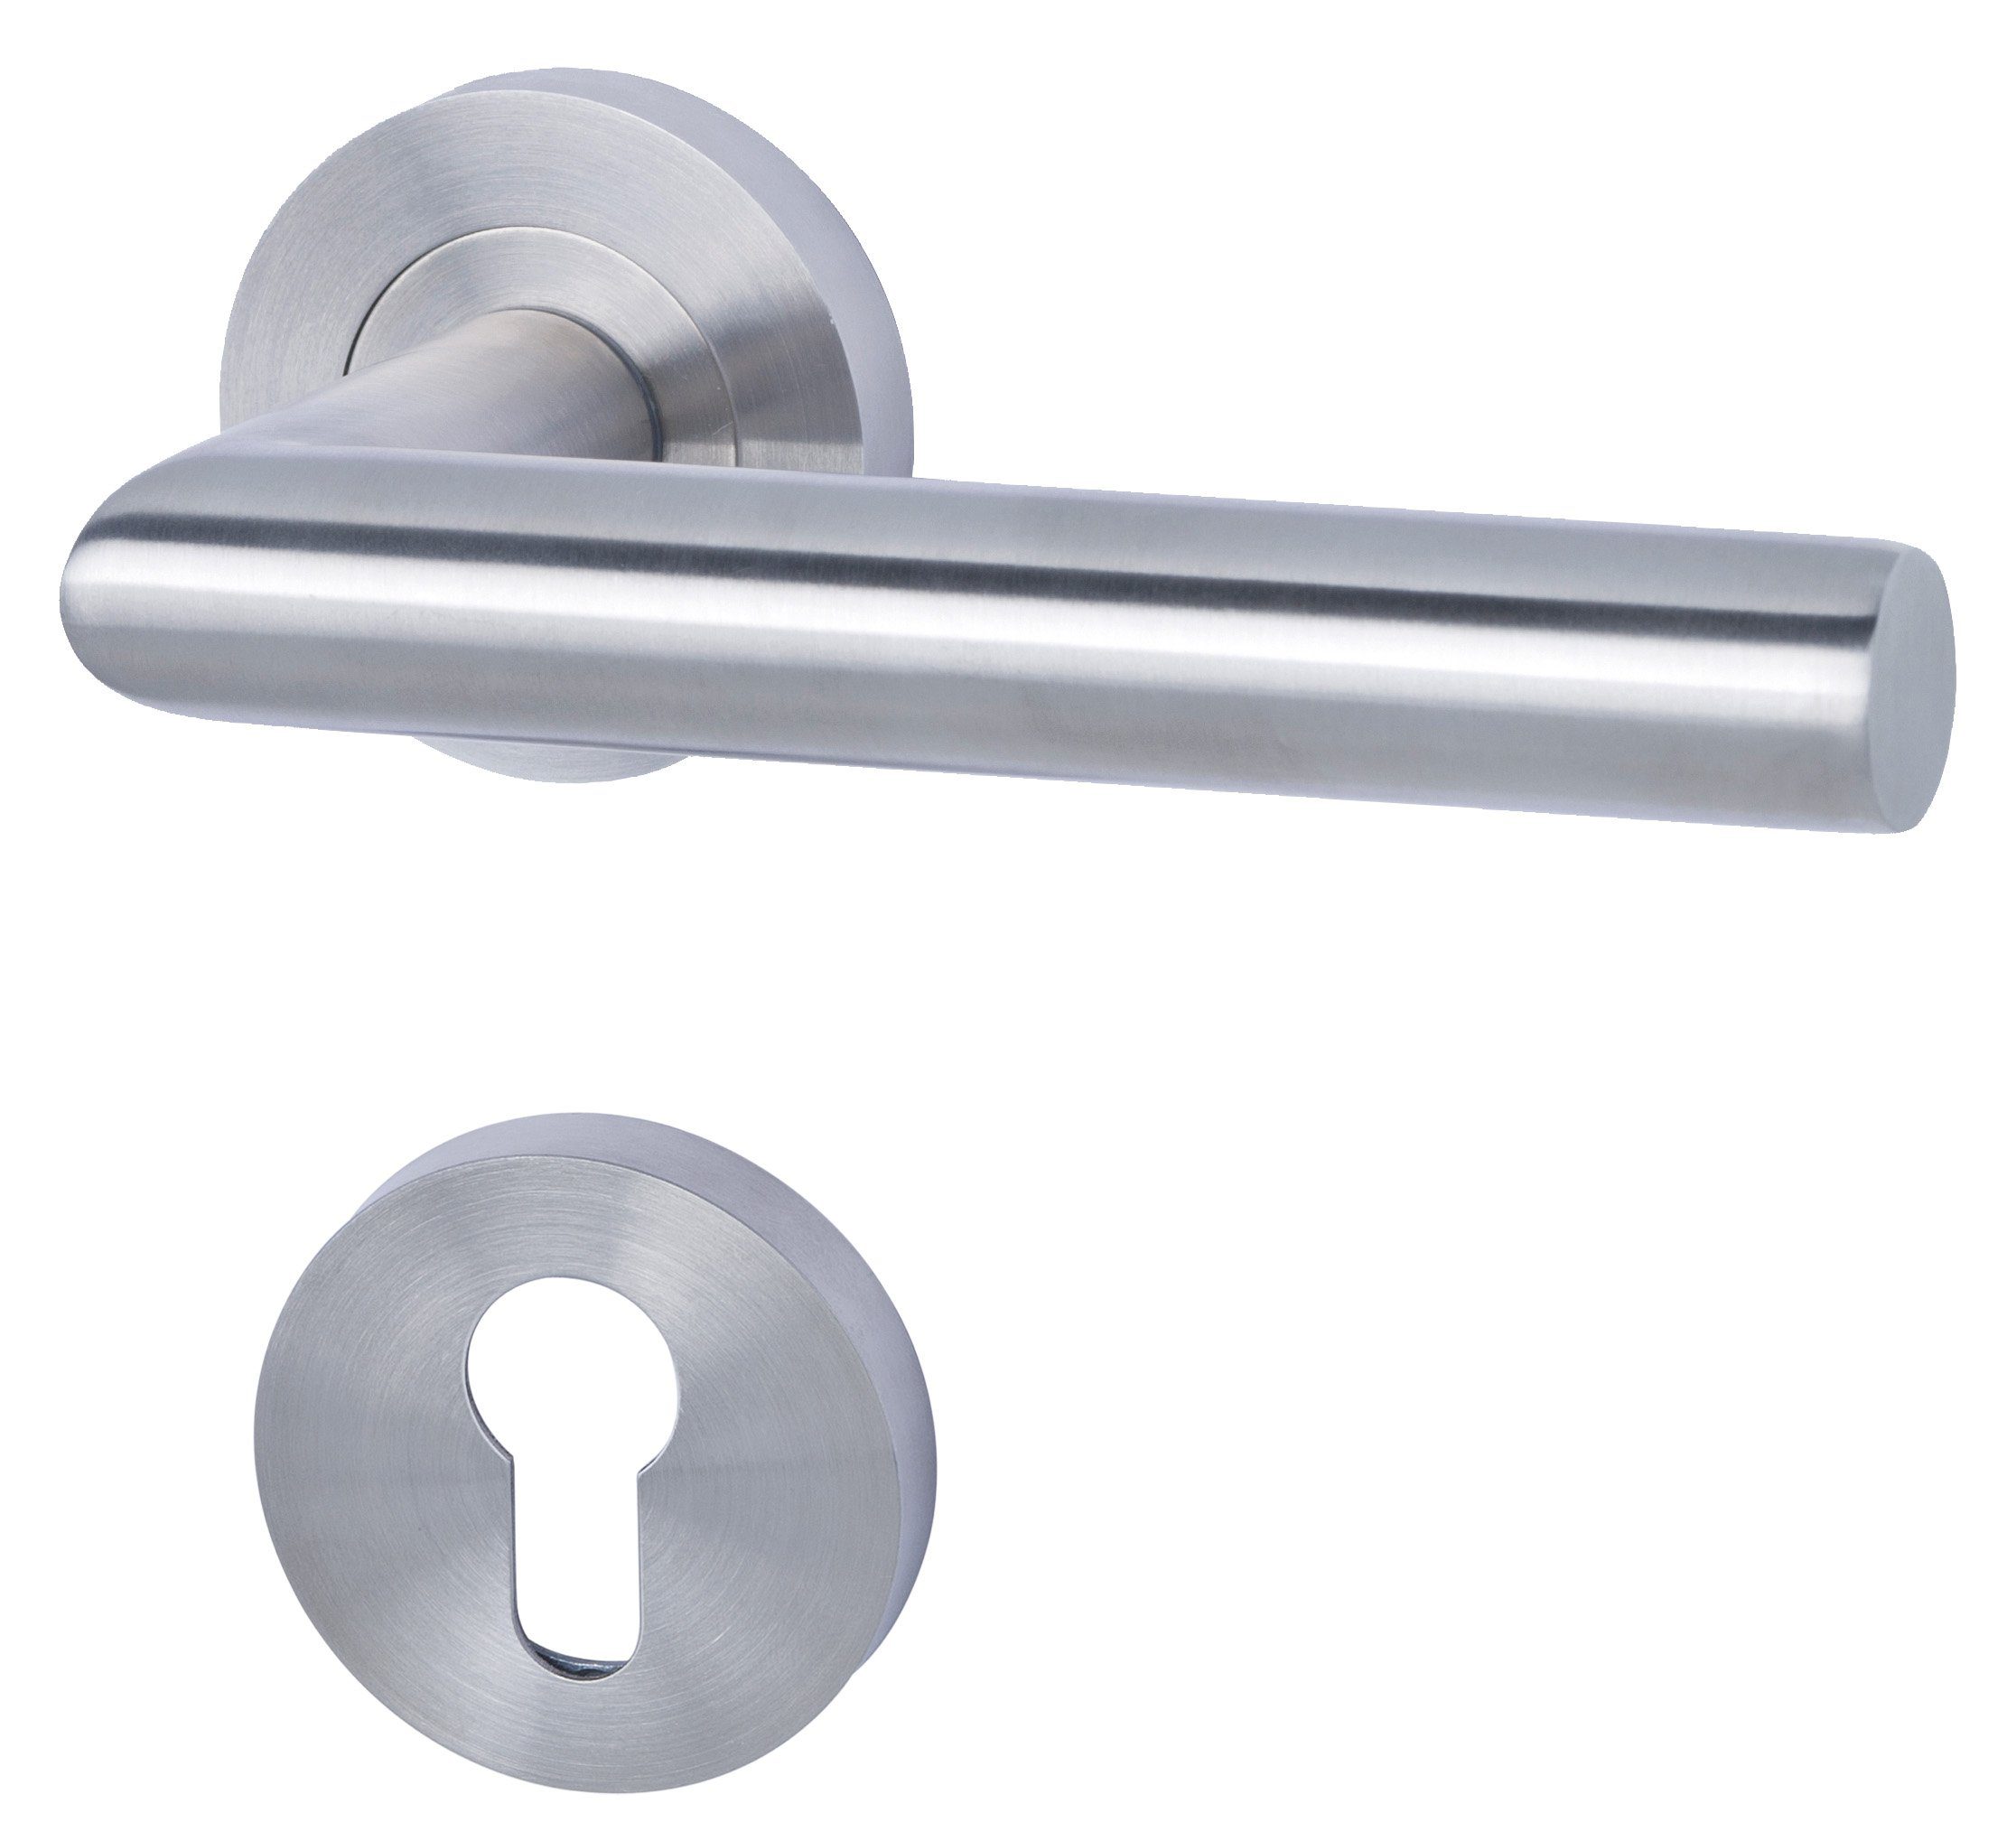 Alpertec Türbeschlag Rosettengarnitur L17/A148 für Türen mit Profilzylinderlochung (1 St)